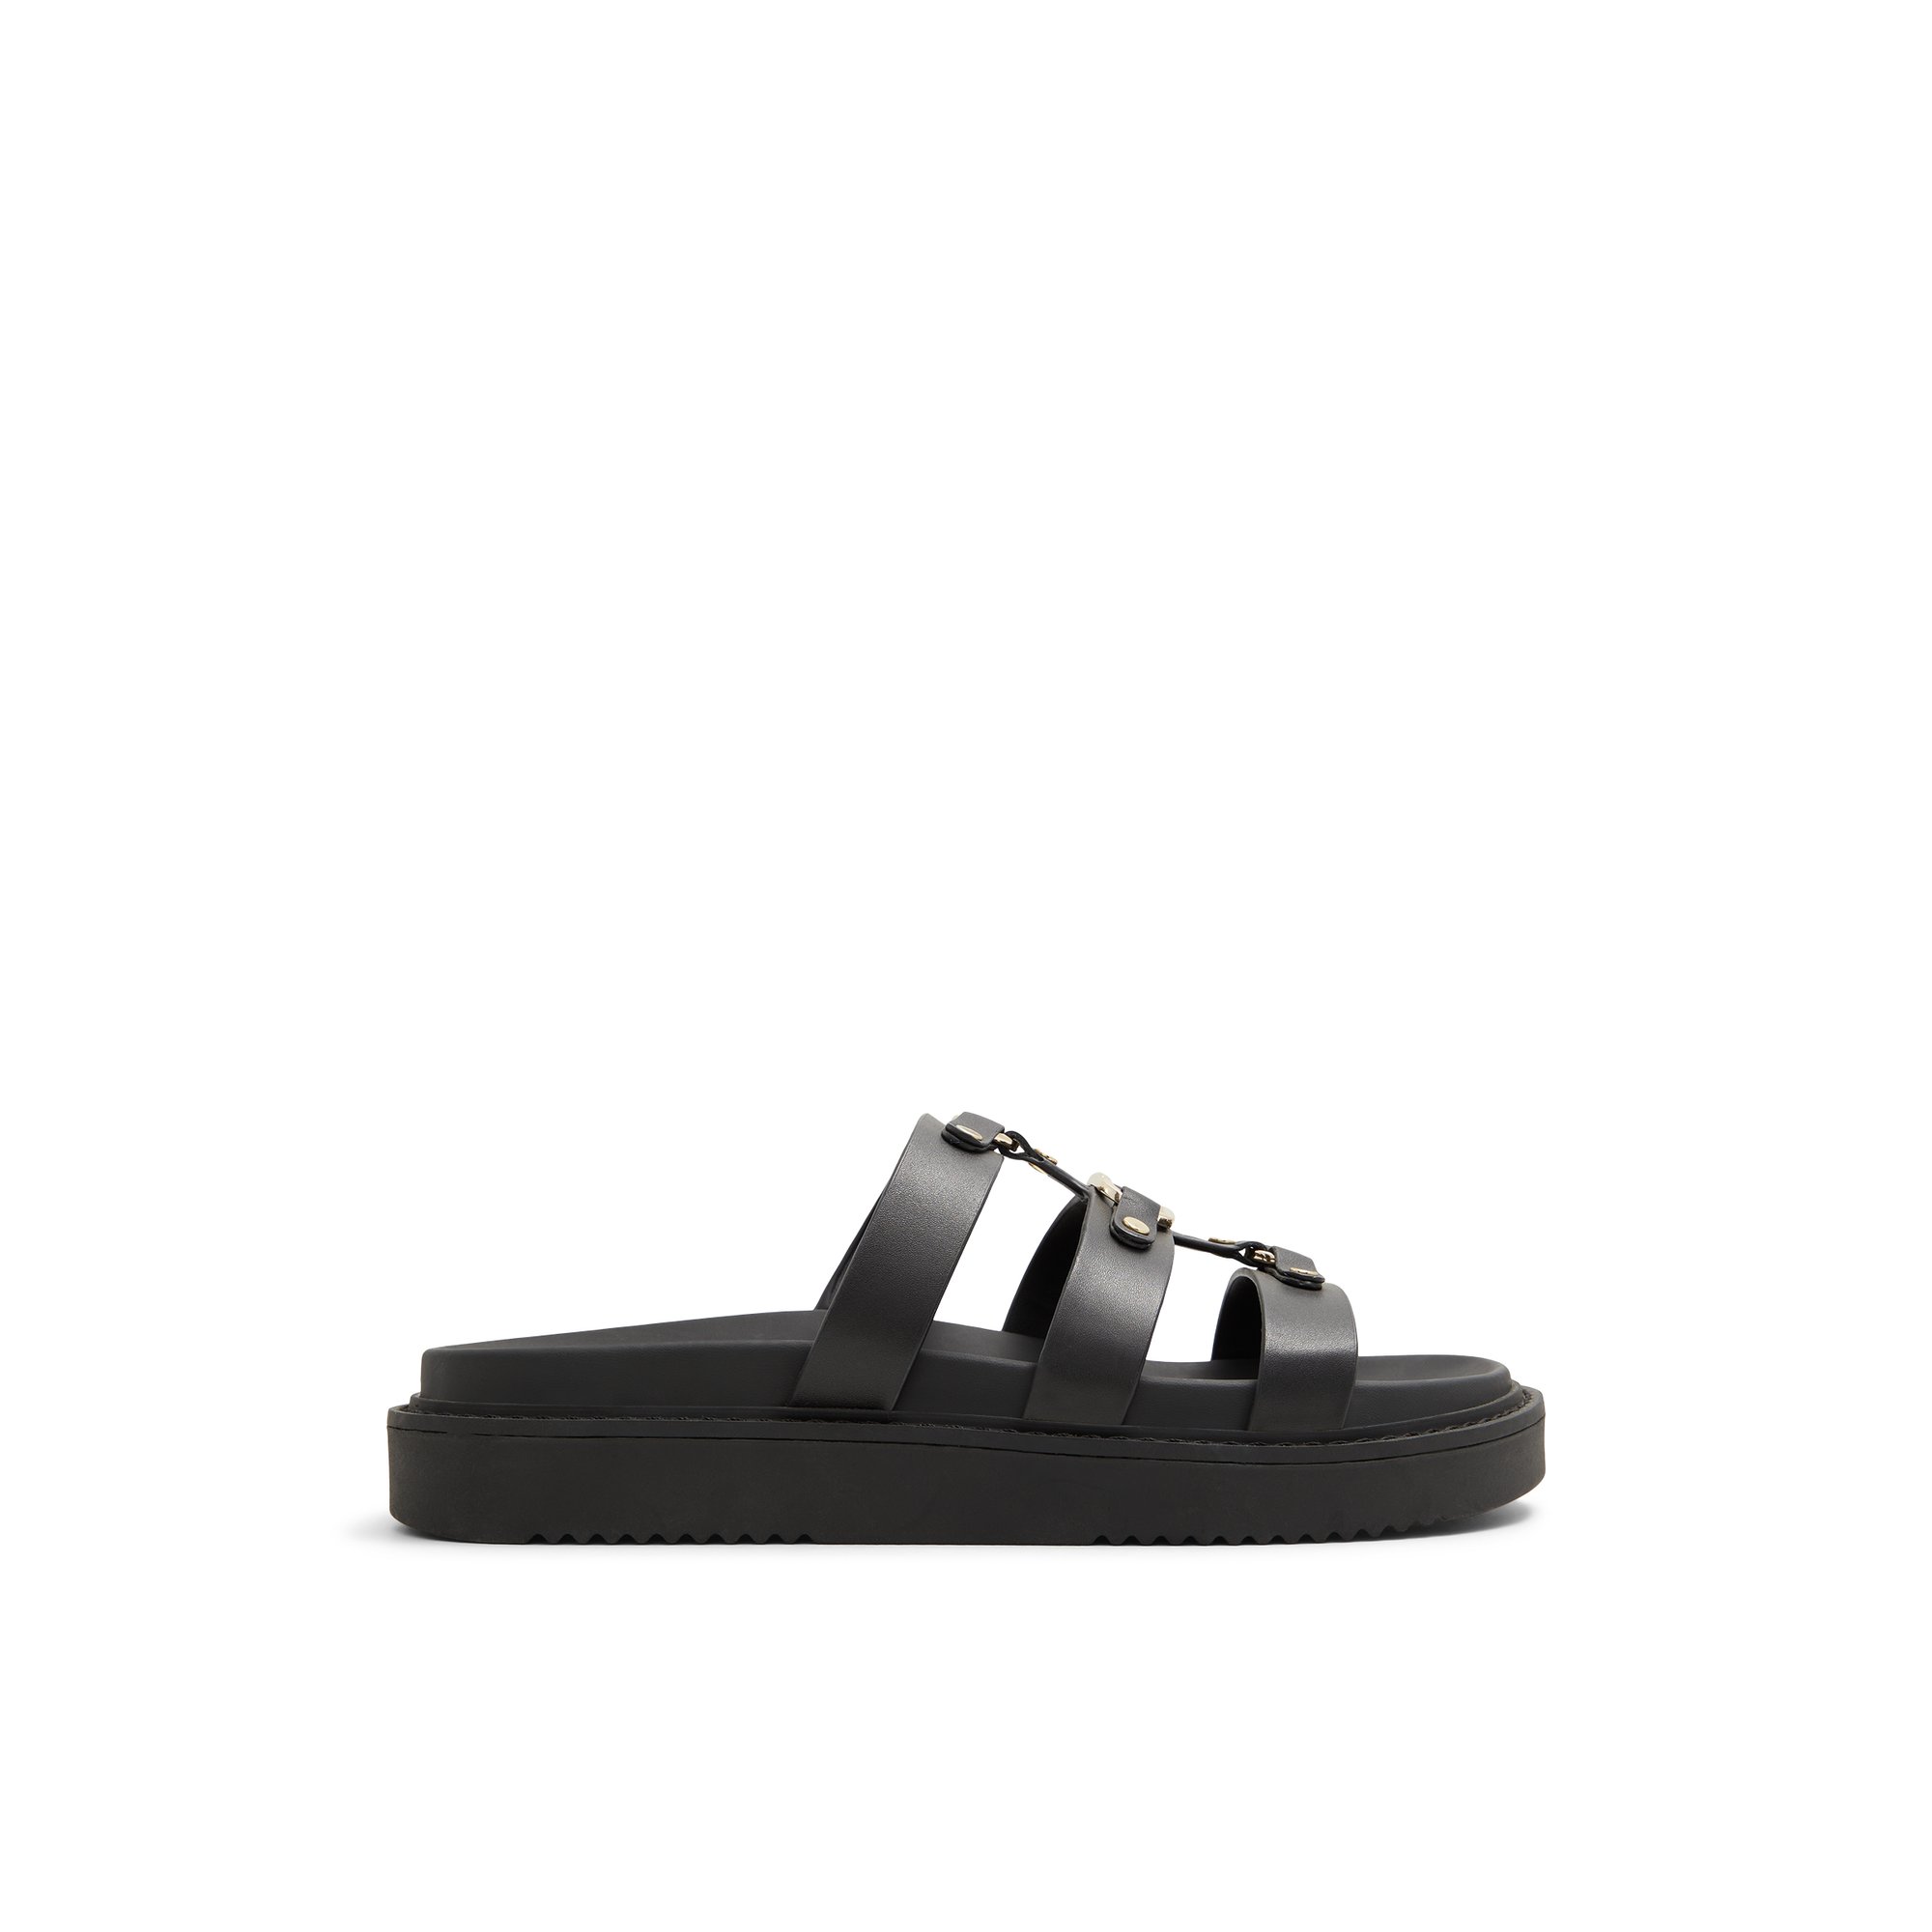 ALDO Mariesoleil - Women's Sandals Flats - Black